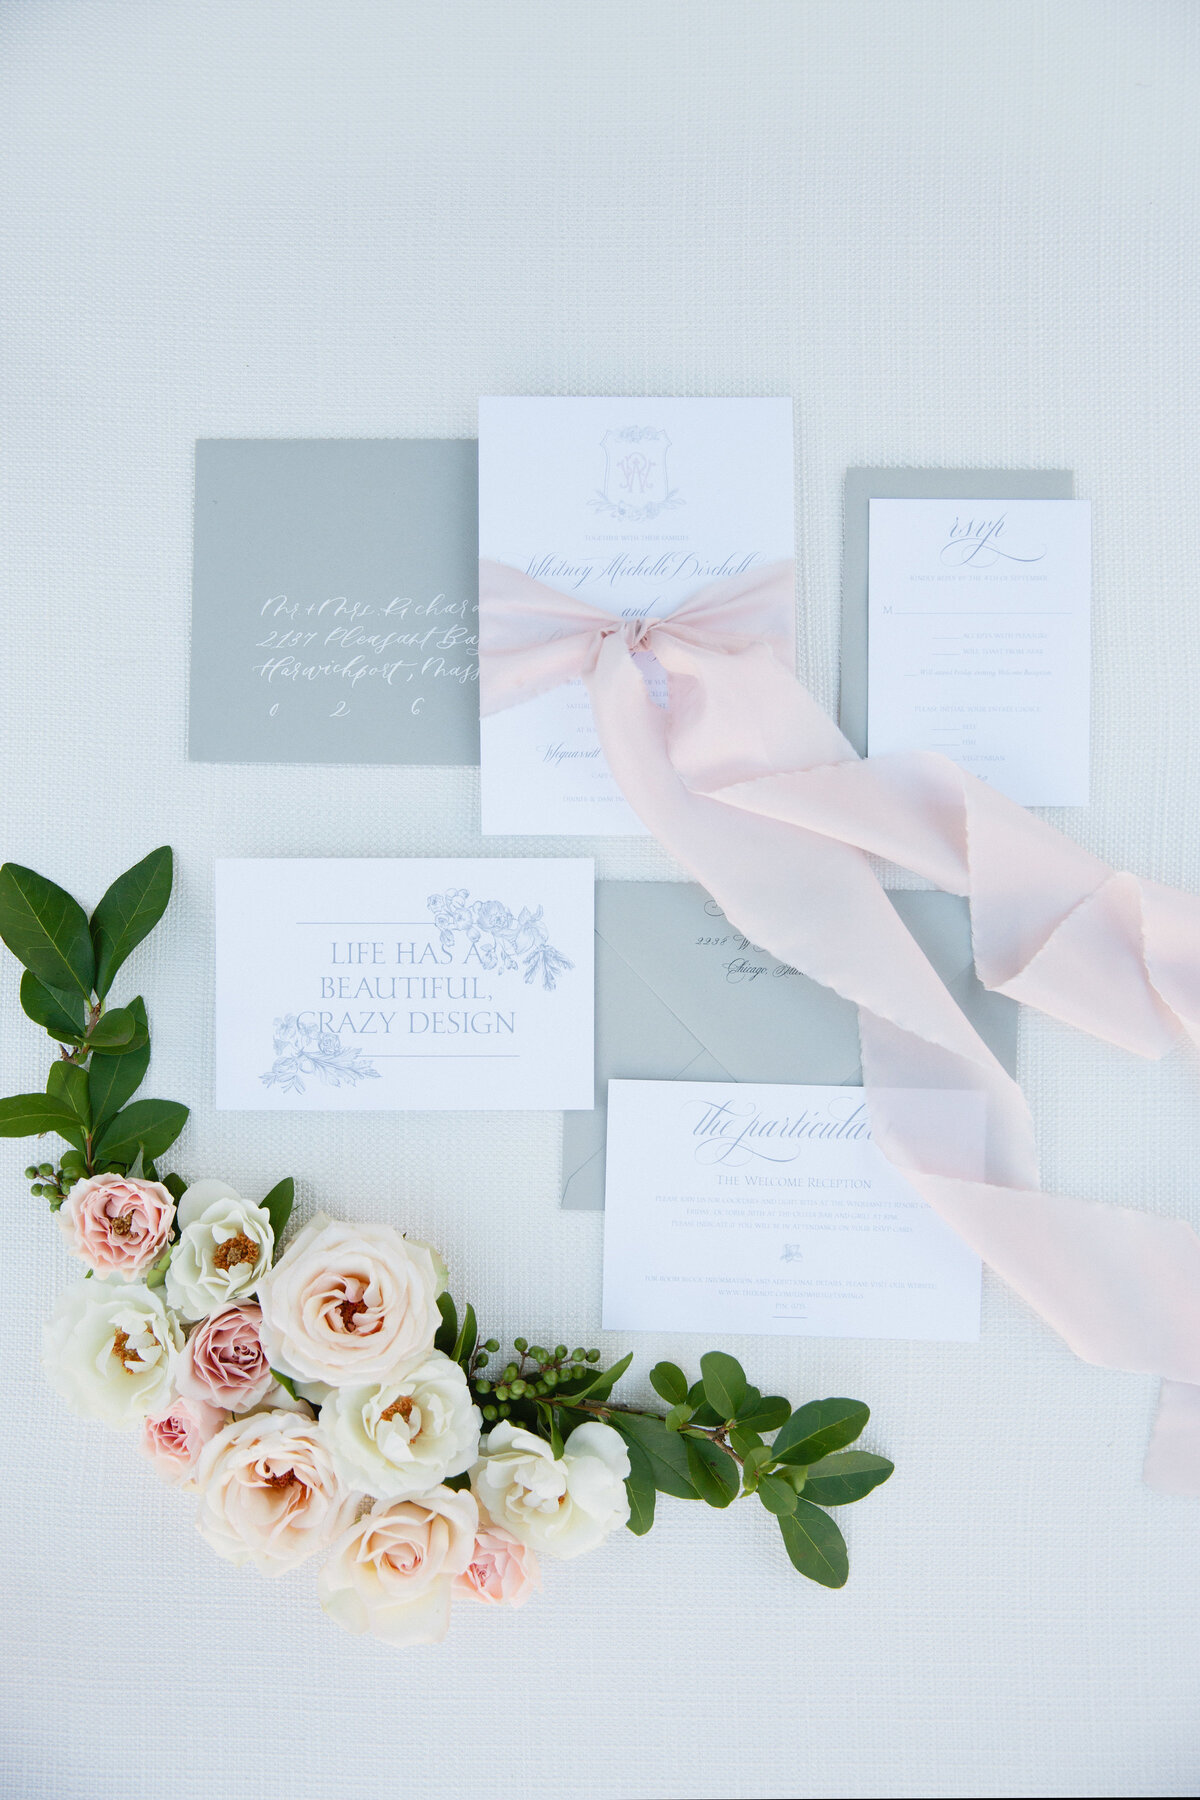 Gray, white and blush wedding invitation for whitney bischoff angel